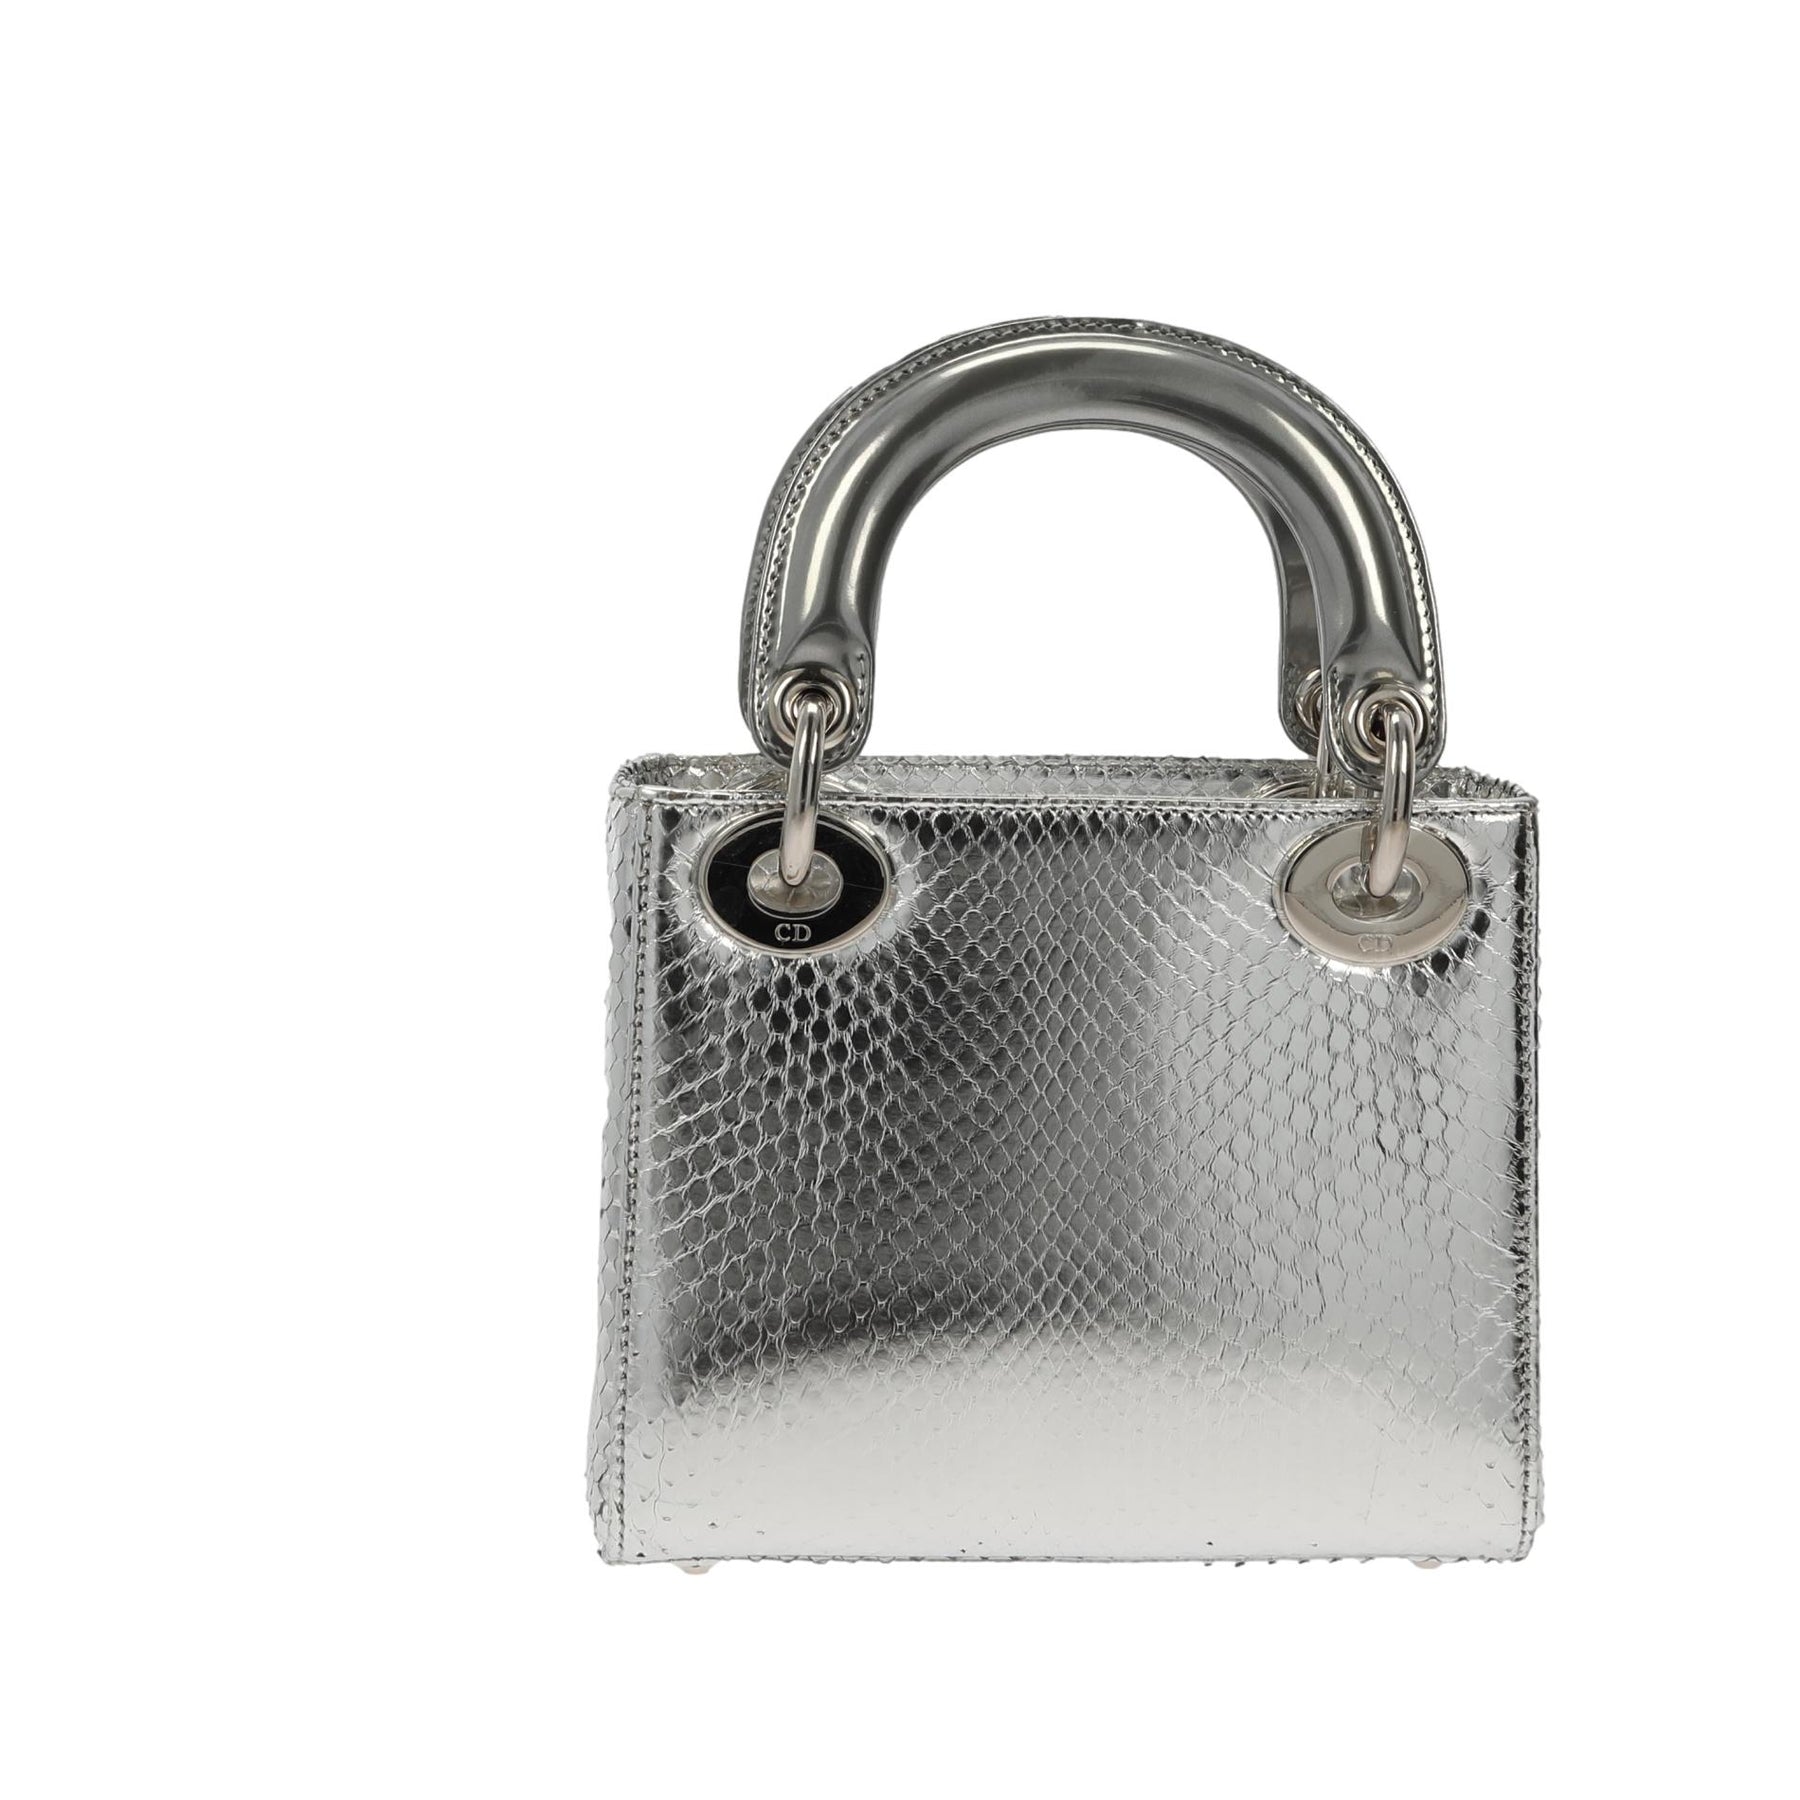 Christian Dior Lady Dior mini bag silver metallic  Christian dior bags,  Designer purses and handbags, Lady dior mini